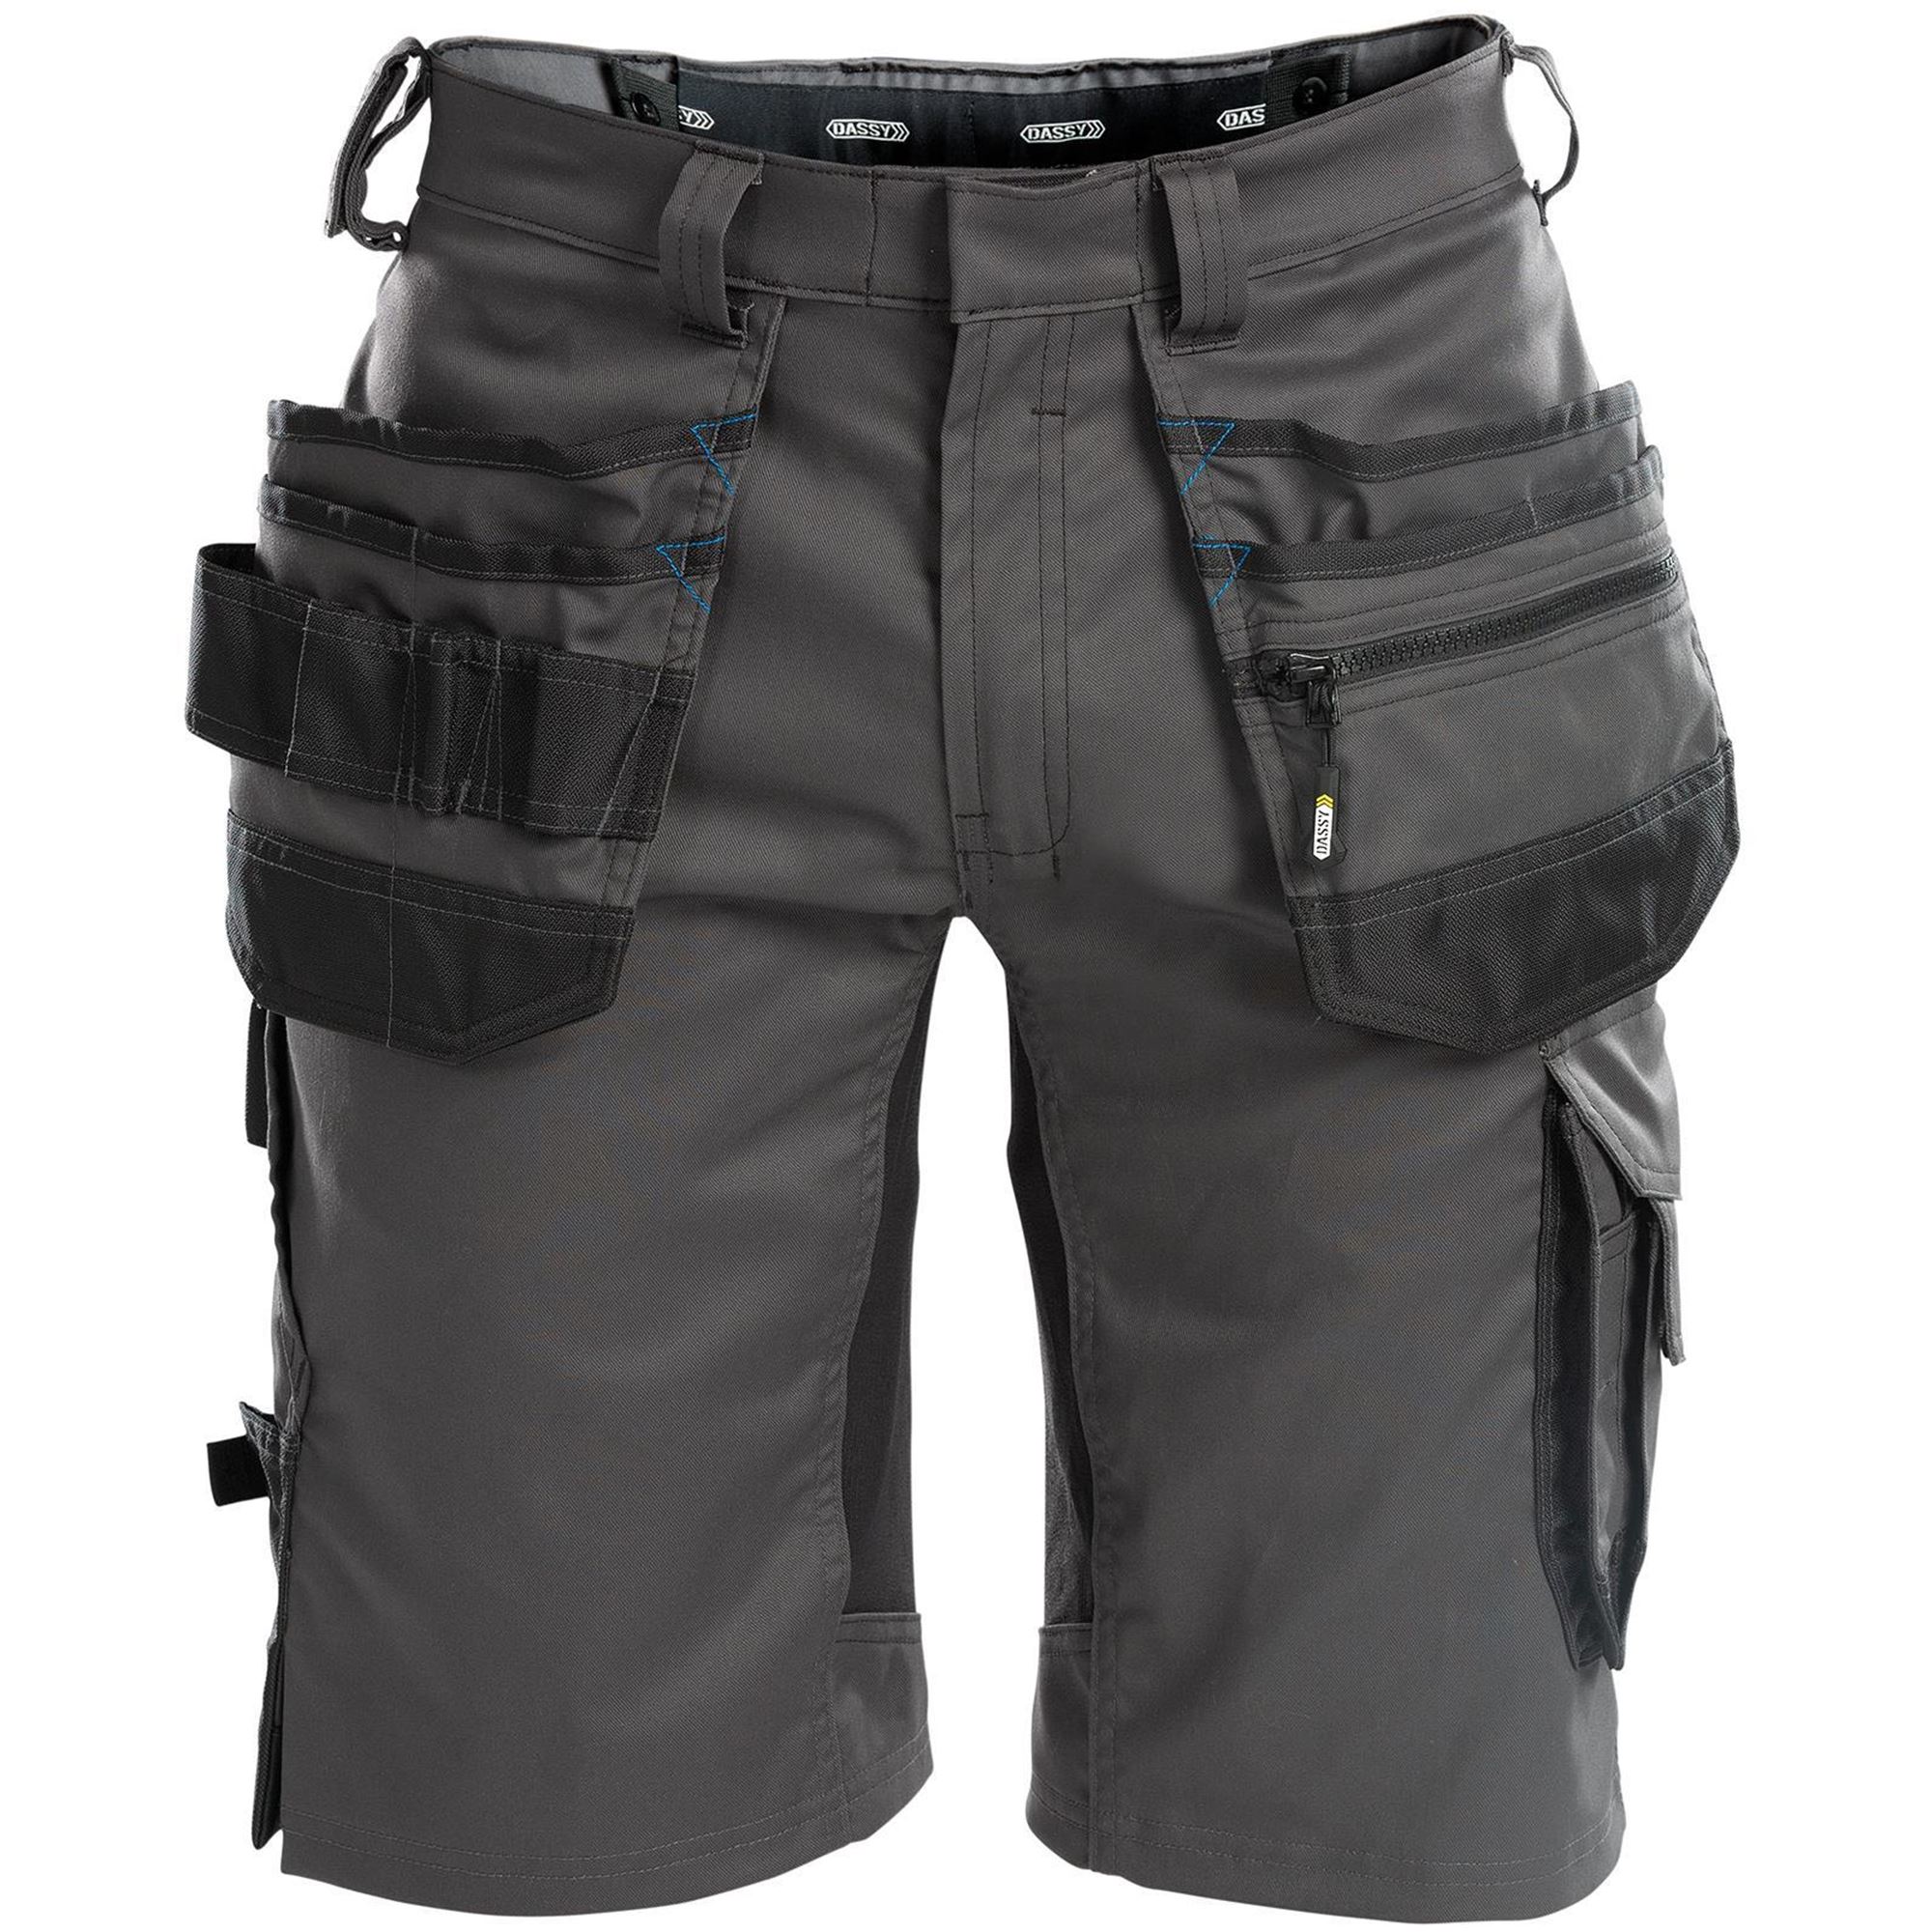 Dassy Trix Sretch Work Shorts